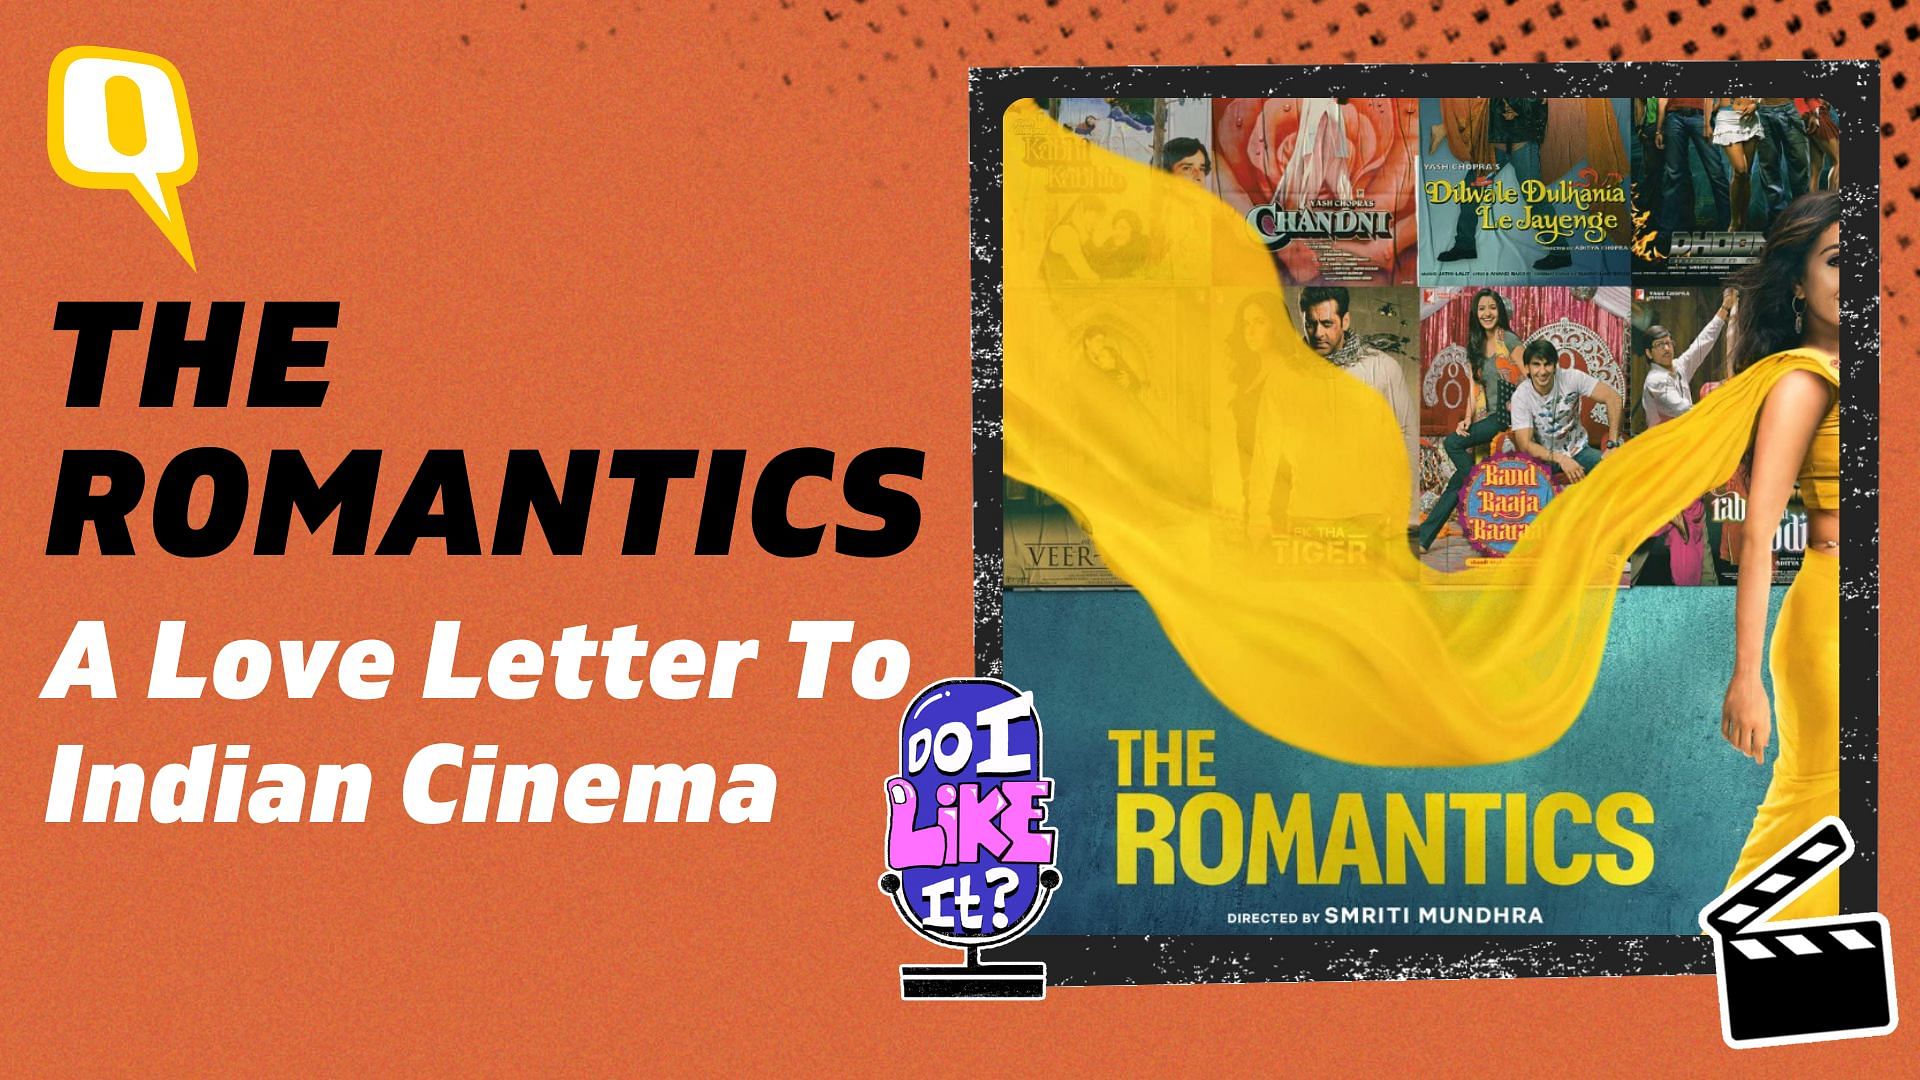 <div class="paragraphs"><p>Pratikshya Mishra reviews The Romantics</p></div>